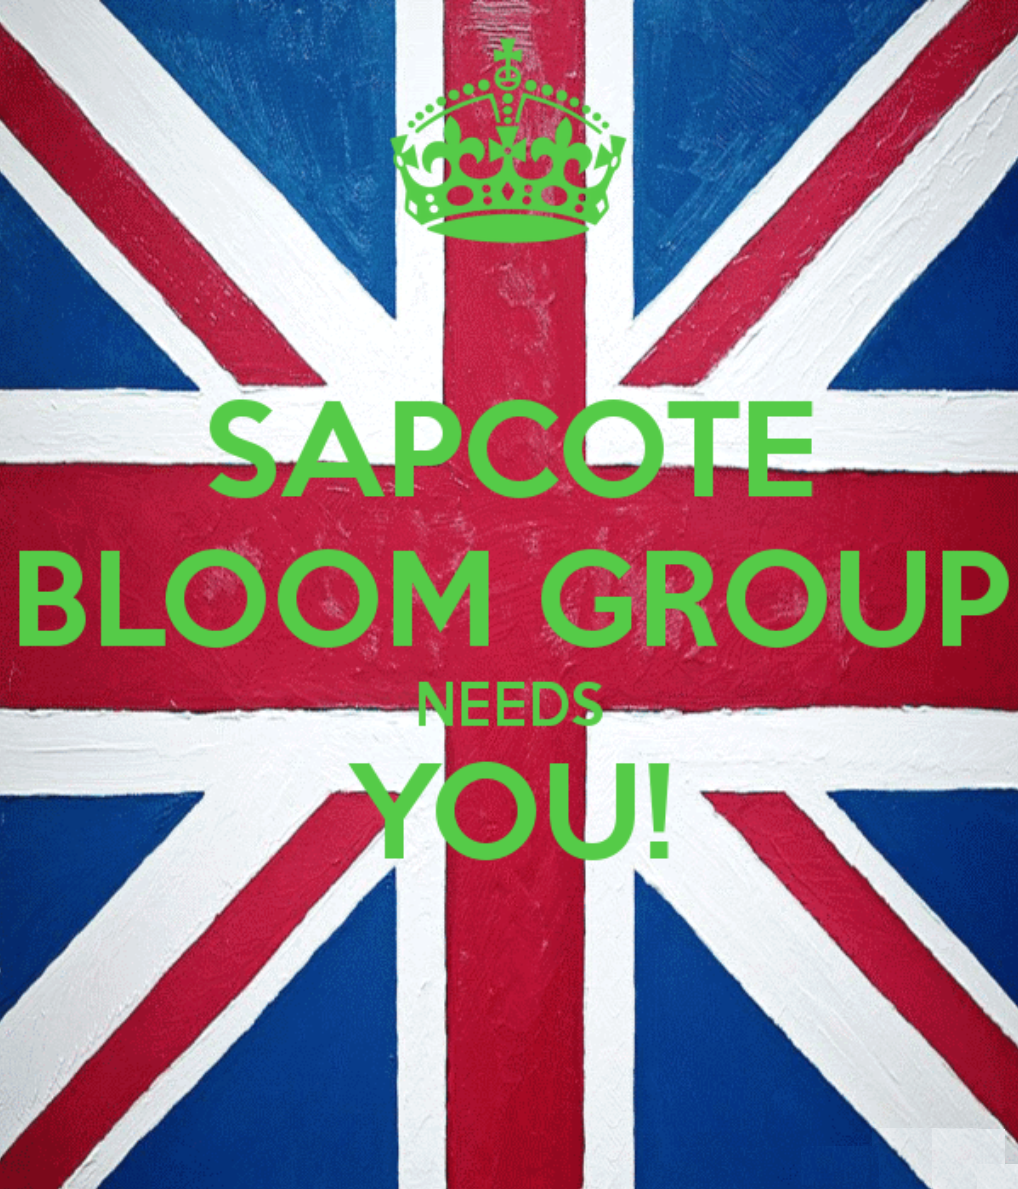 Sapcote Bloom Group Needs You